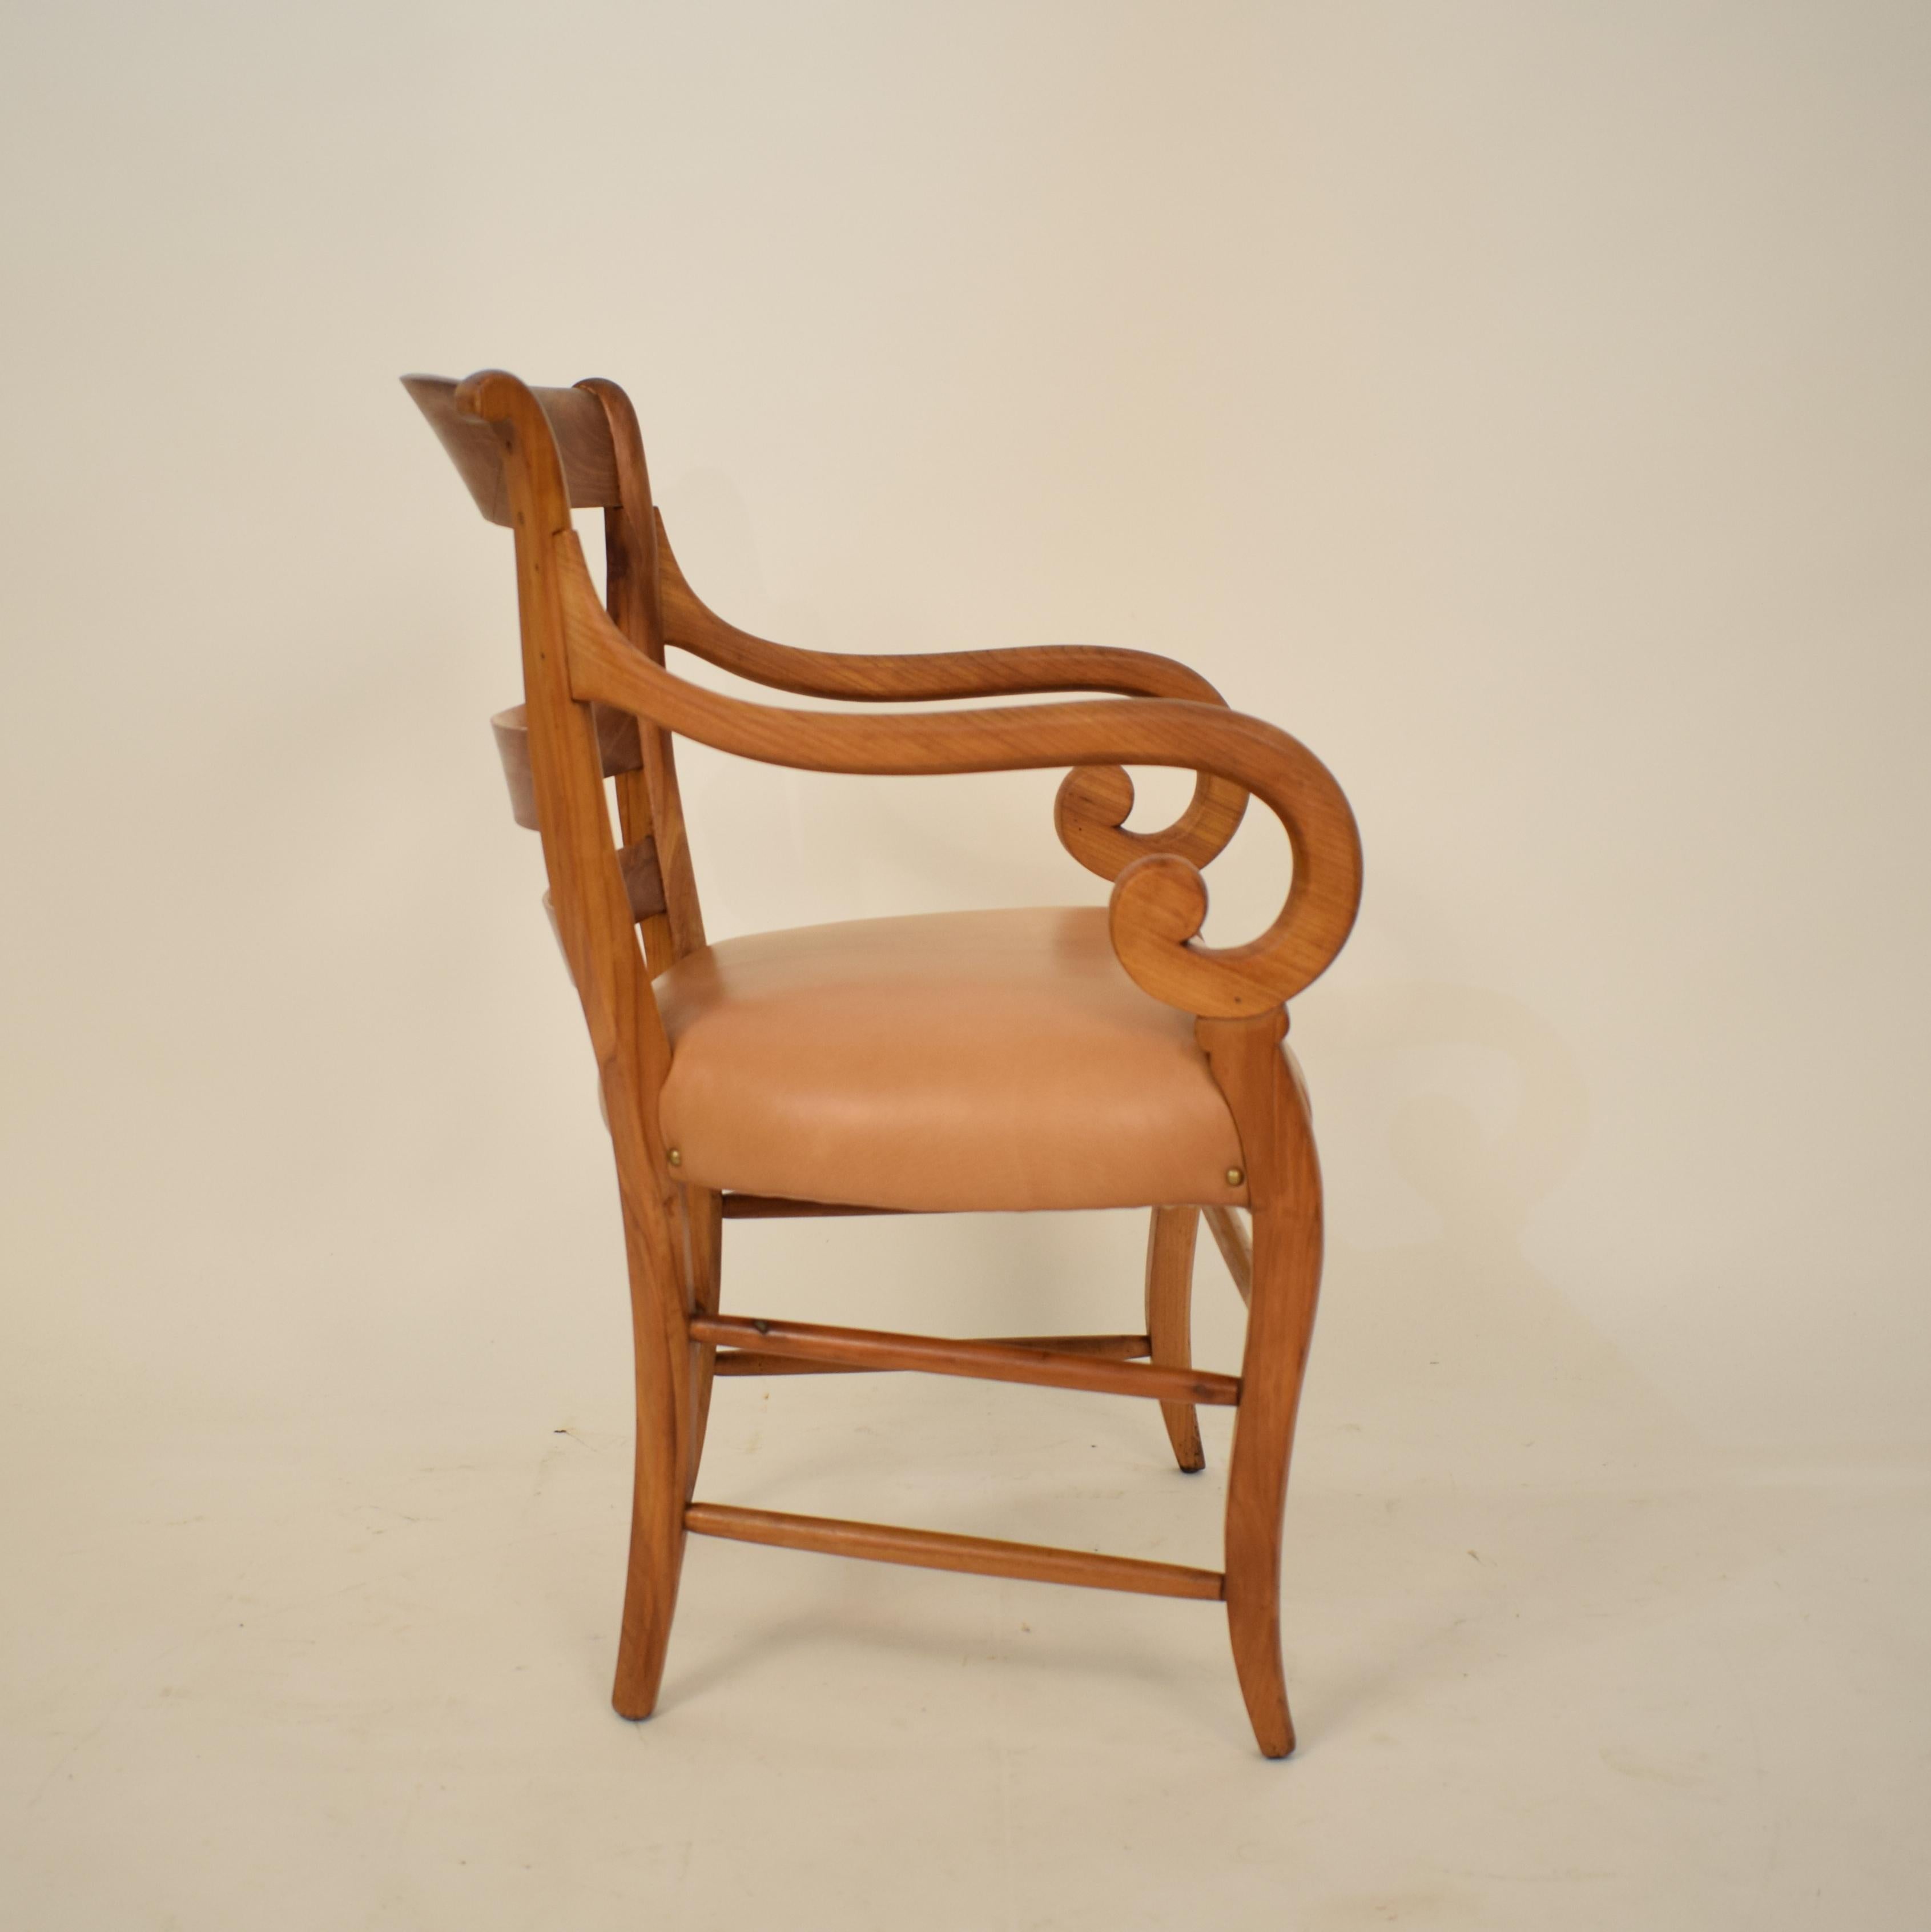 19th Century German Cherrywood Biedermeier Armchair with Brown Leather Seat For Sale 12